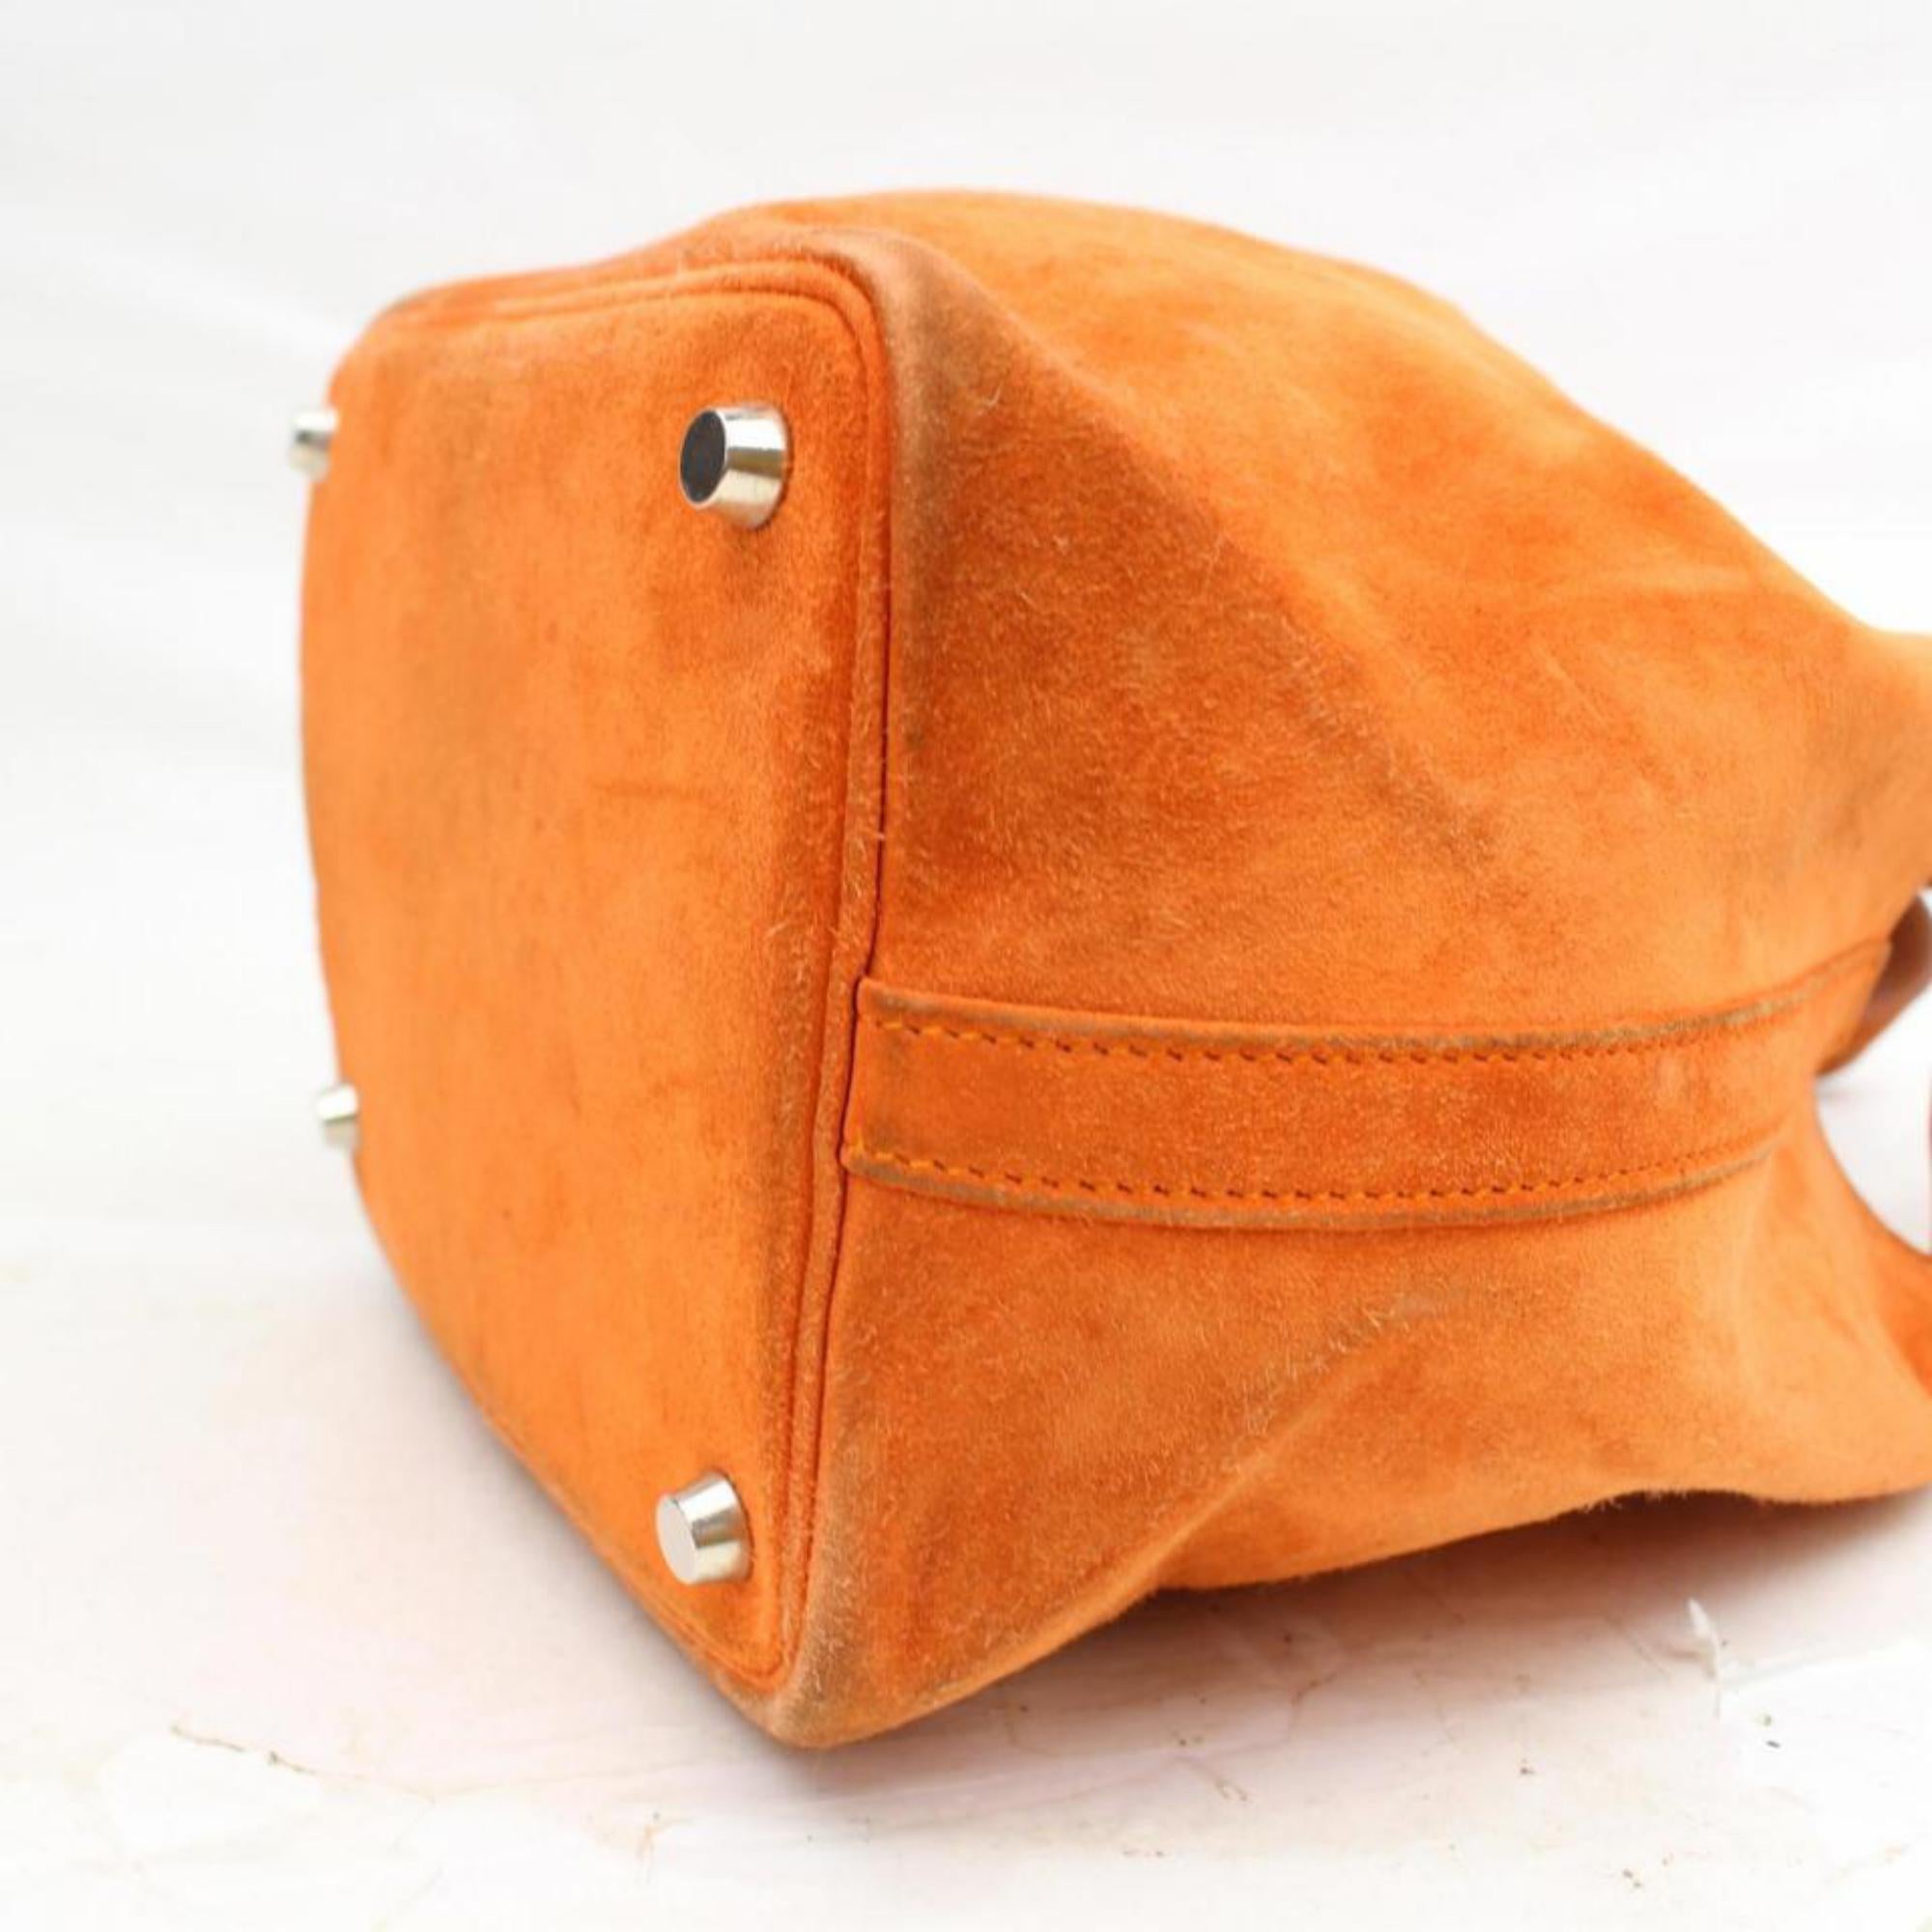 Hermès Picotin 18 Pm 868694 Orange Suede Leather Tote For Sale 4